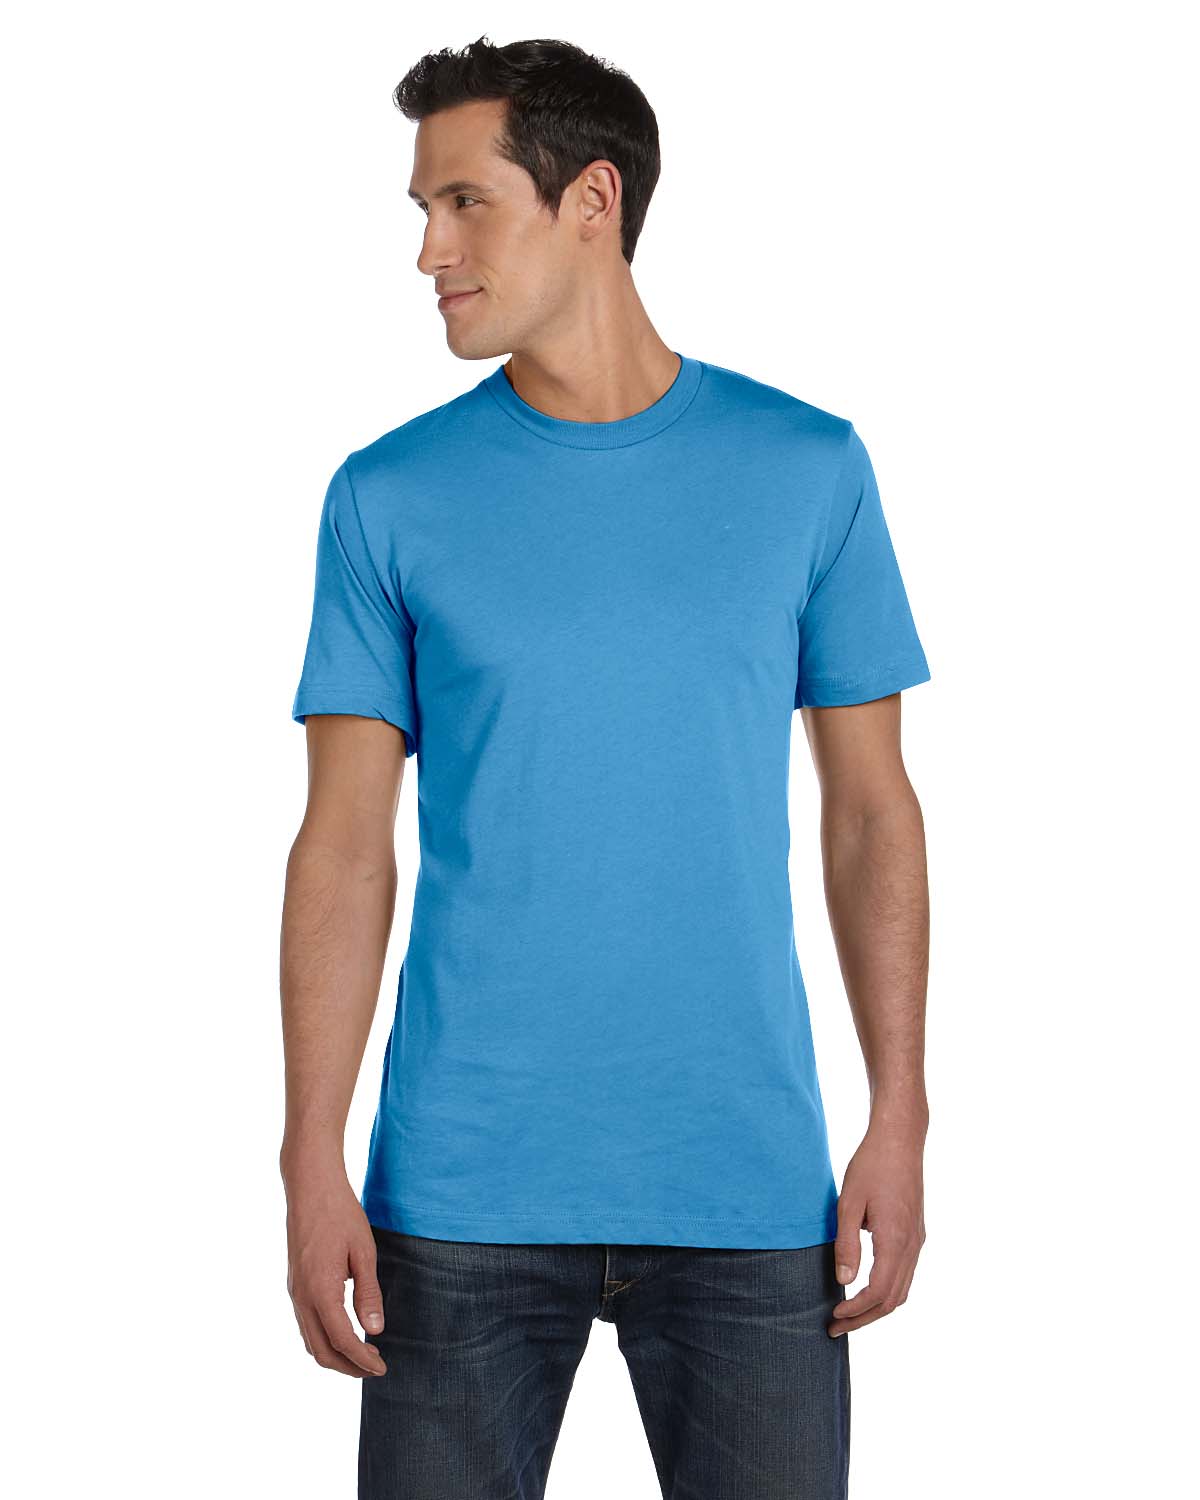 Bella + Canvas Unisex Cotton Jersey T-Shirt, Asphalt - 4XL